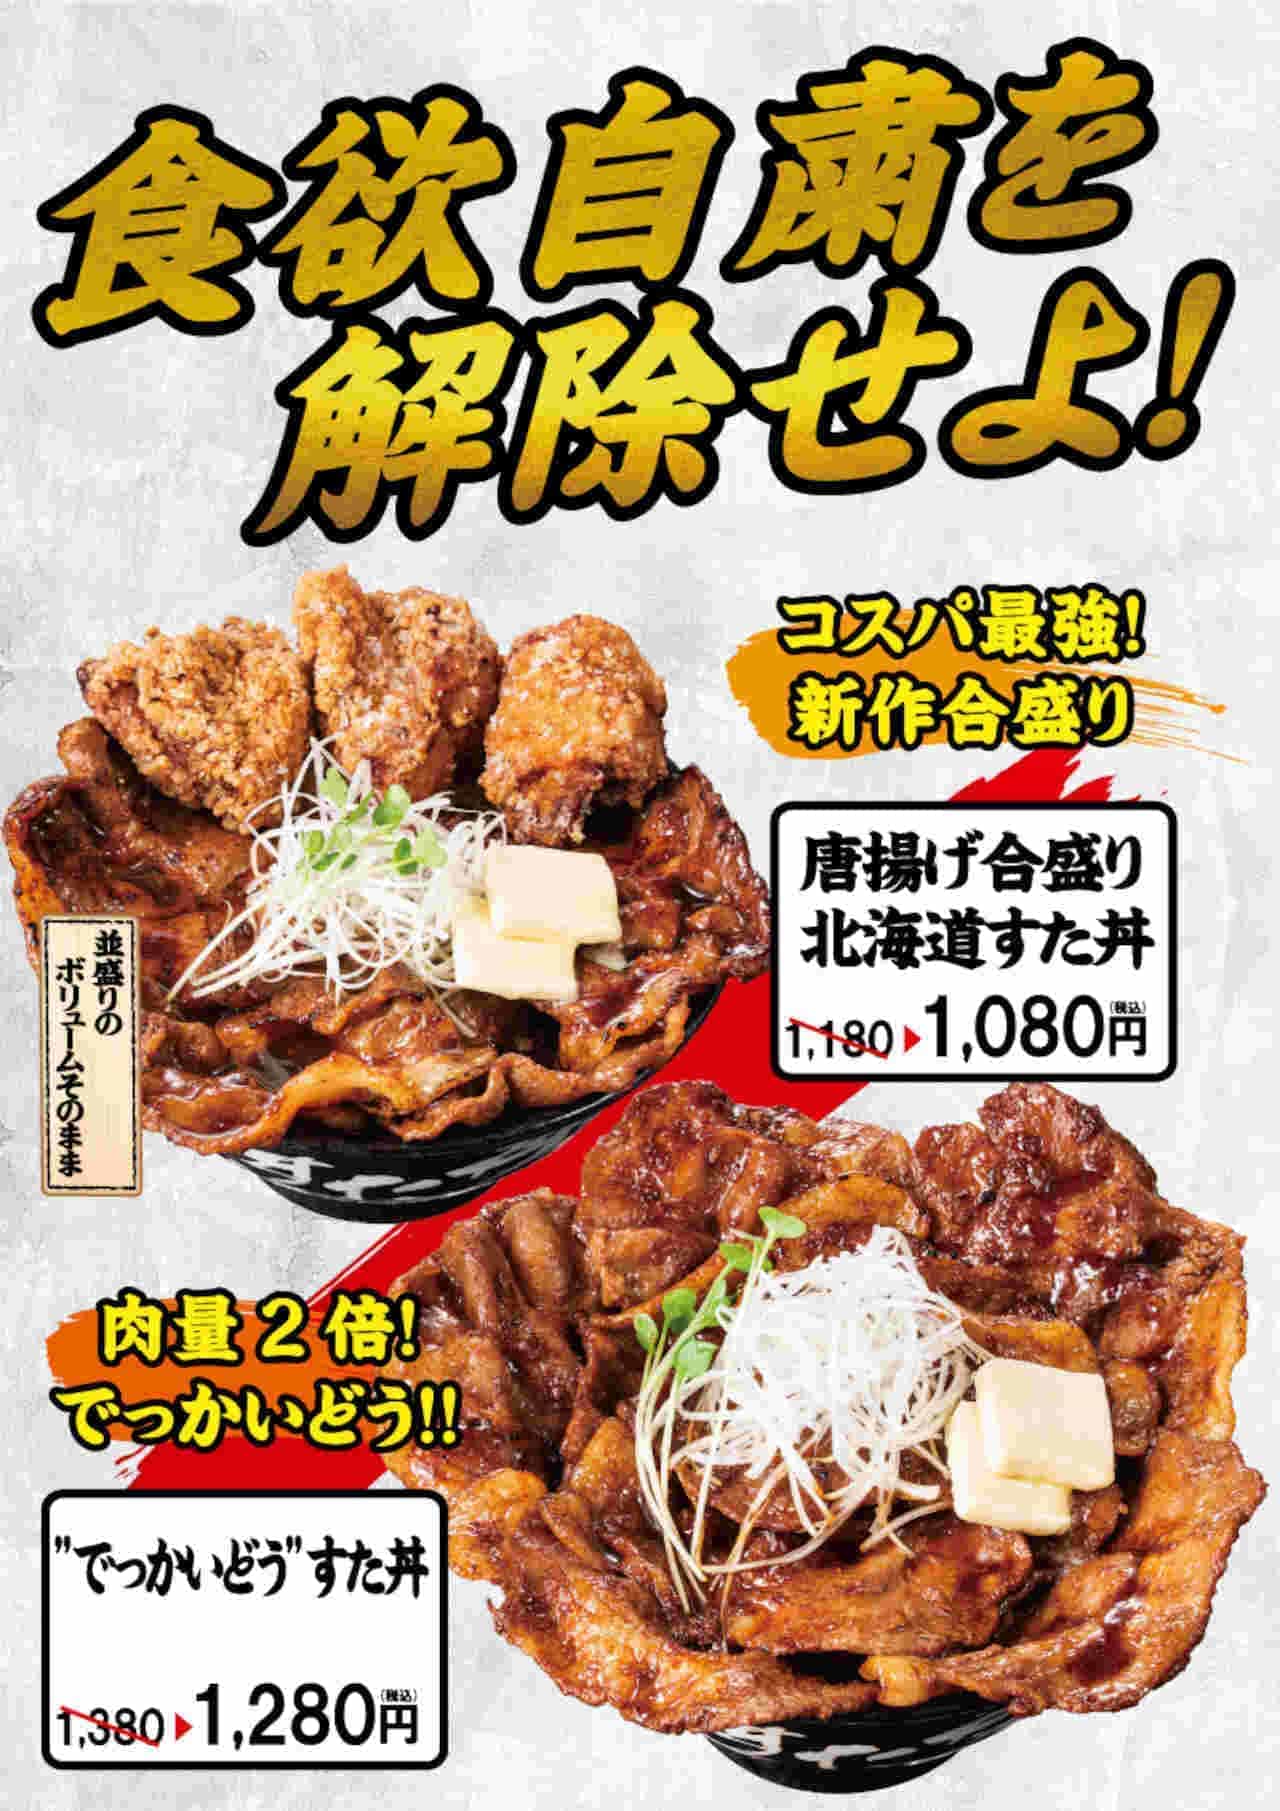 Legendary Suta Donburi "Hokkaido Suta Don" "Fried Fried Rice Bowl Hokkaido Suta Don" "Big Do" Suta Don